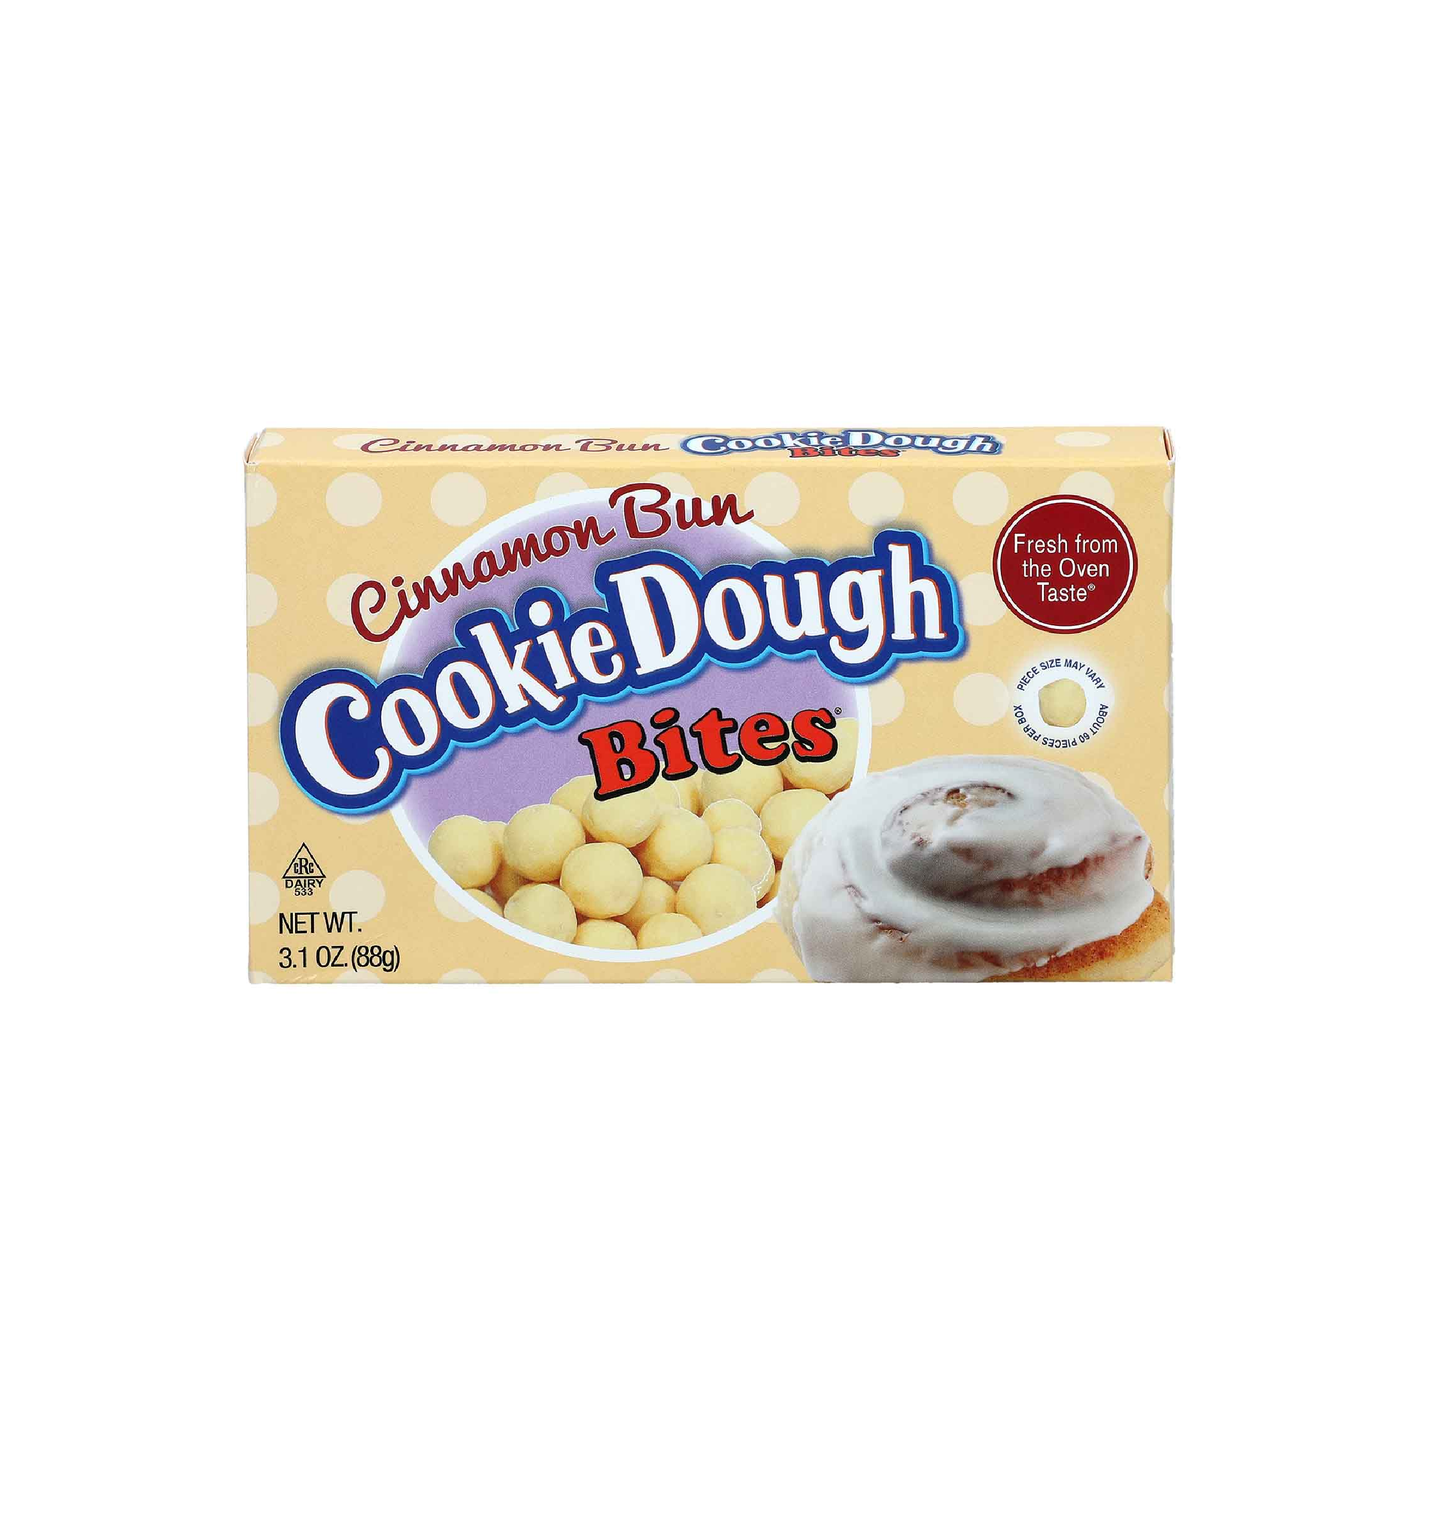 Cookie Dough Bites Cinnamon Bun Bites 88g – Box of 12